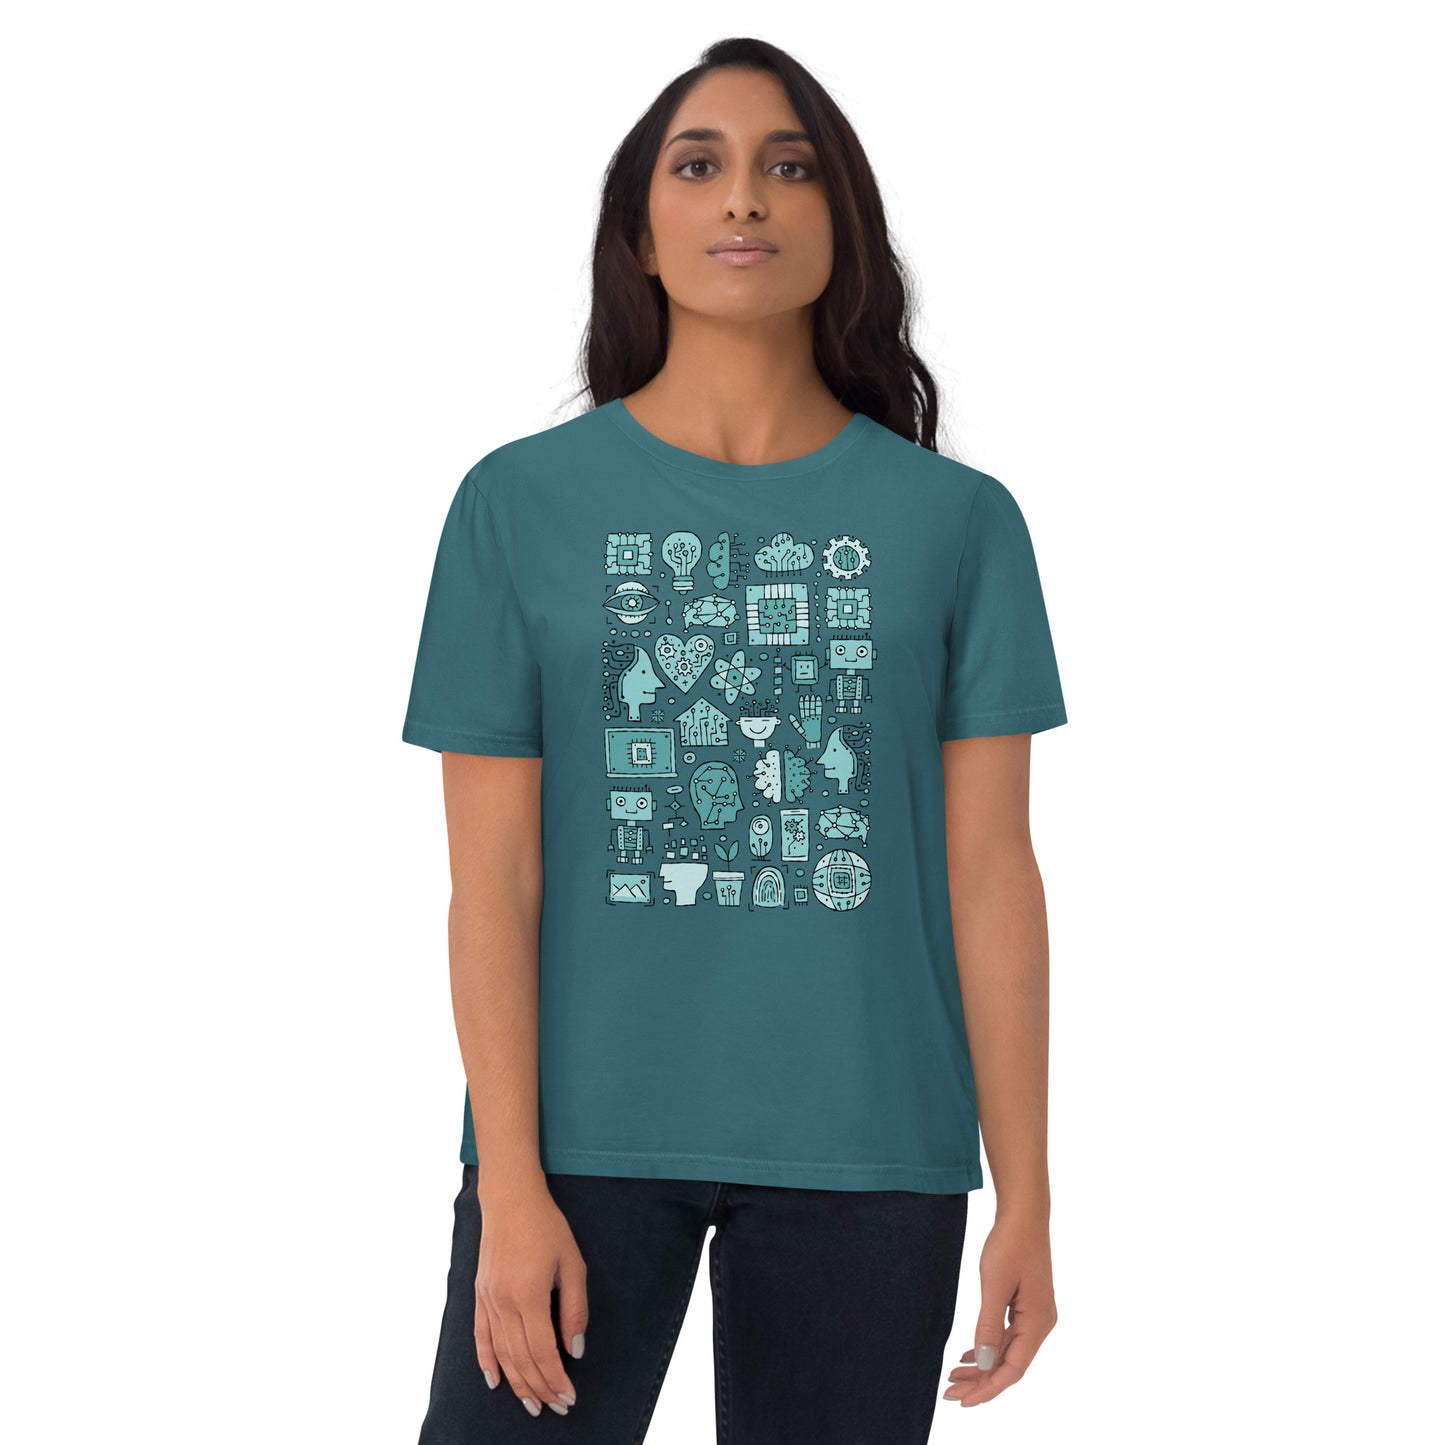 Unisex organic cotton t-shirt Artificial Intelligence kudrylab